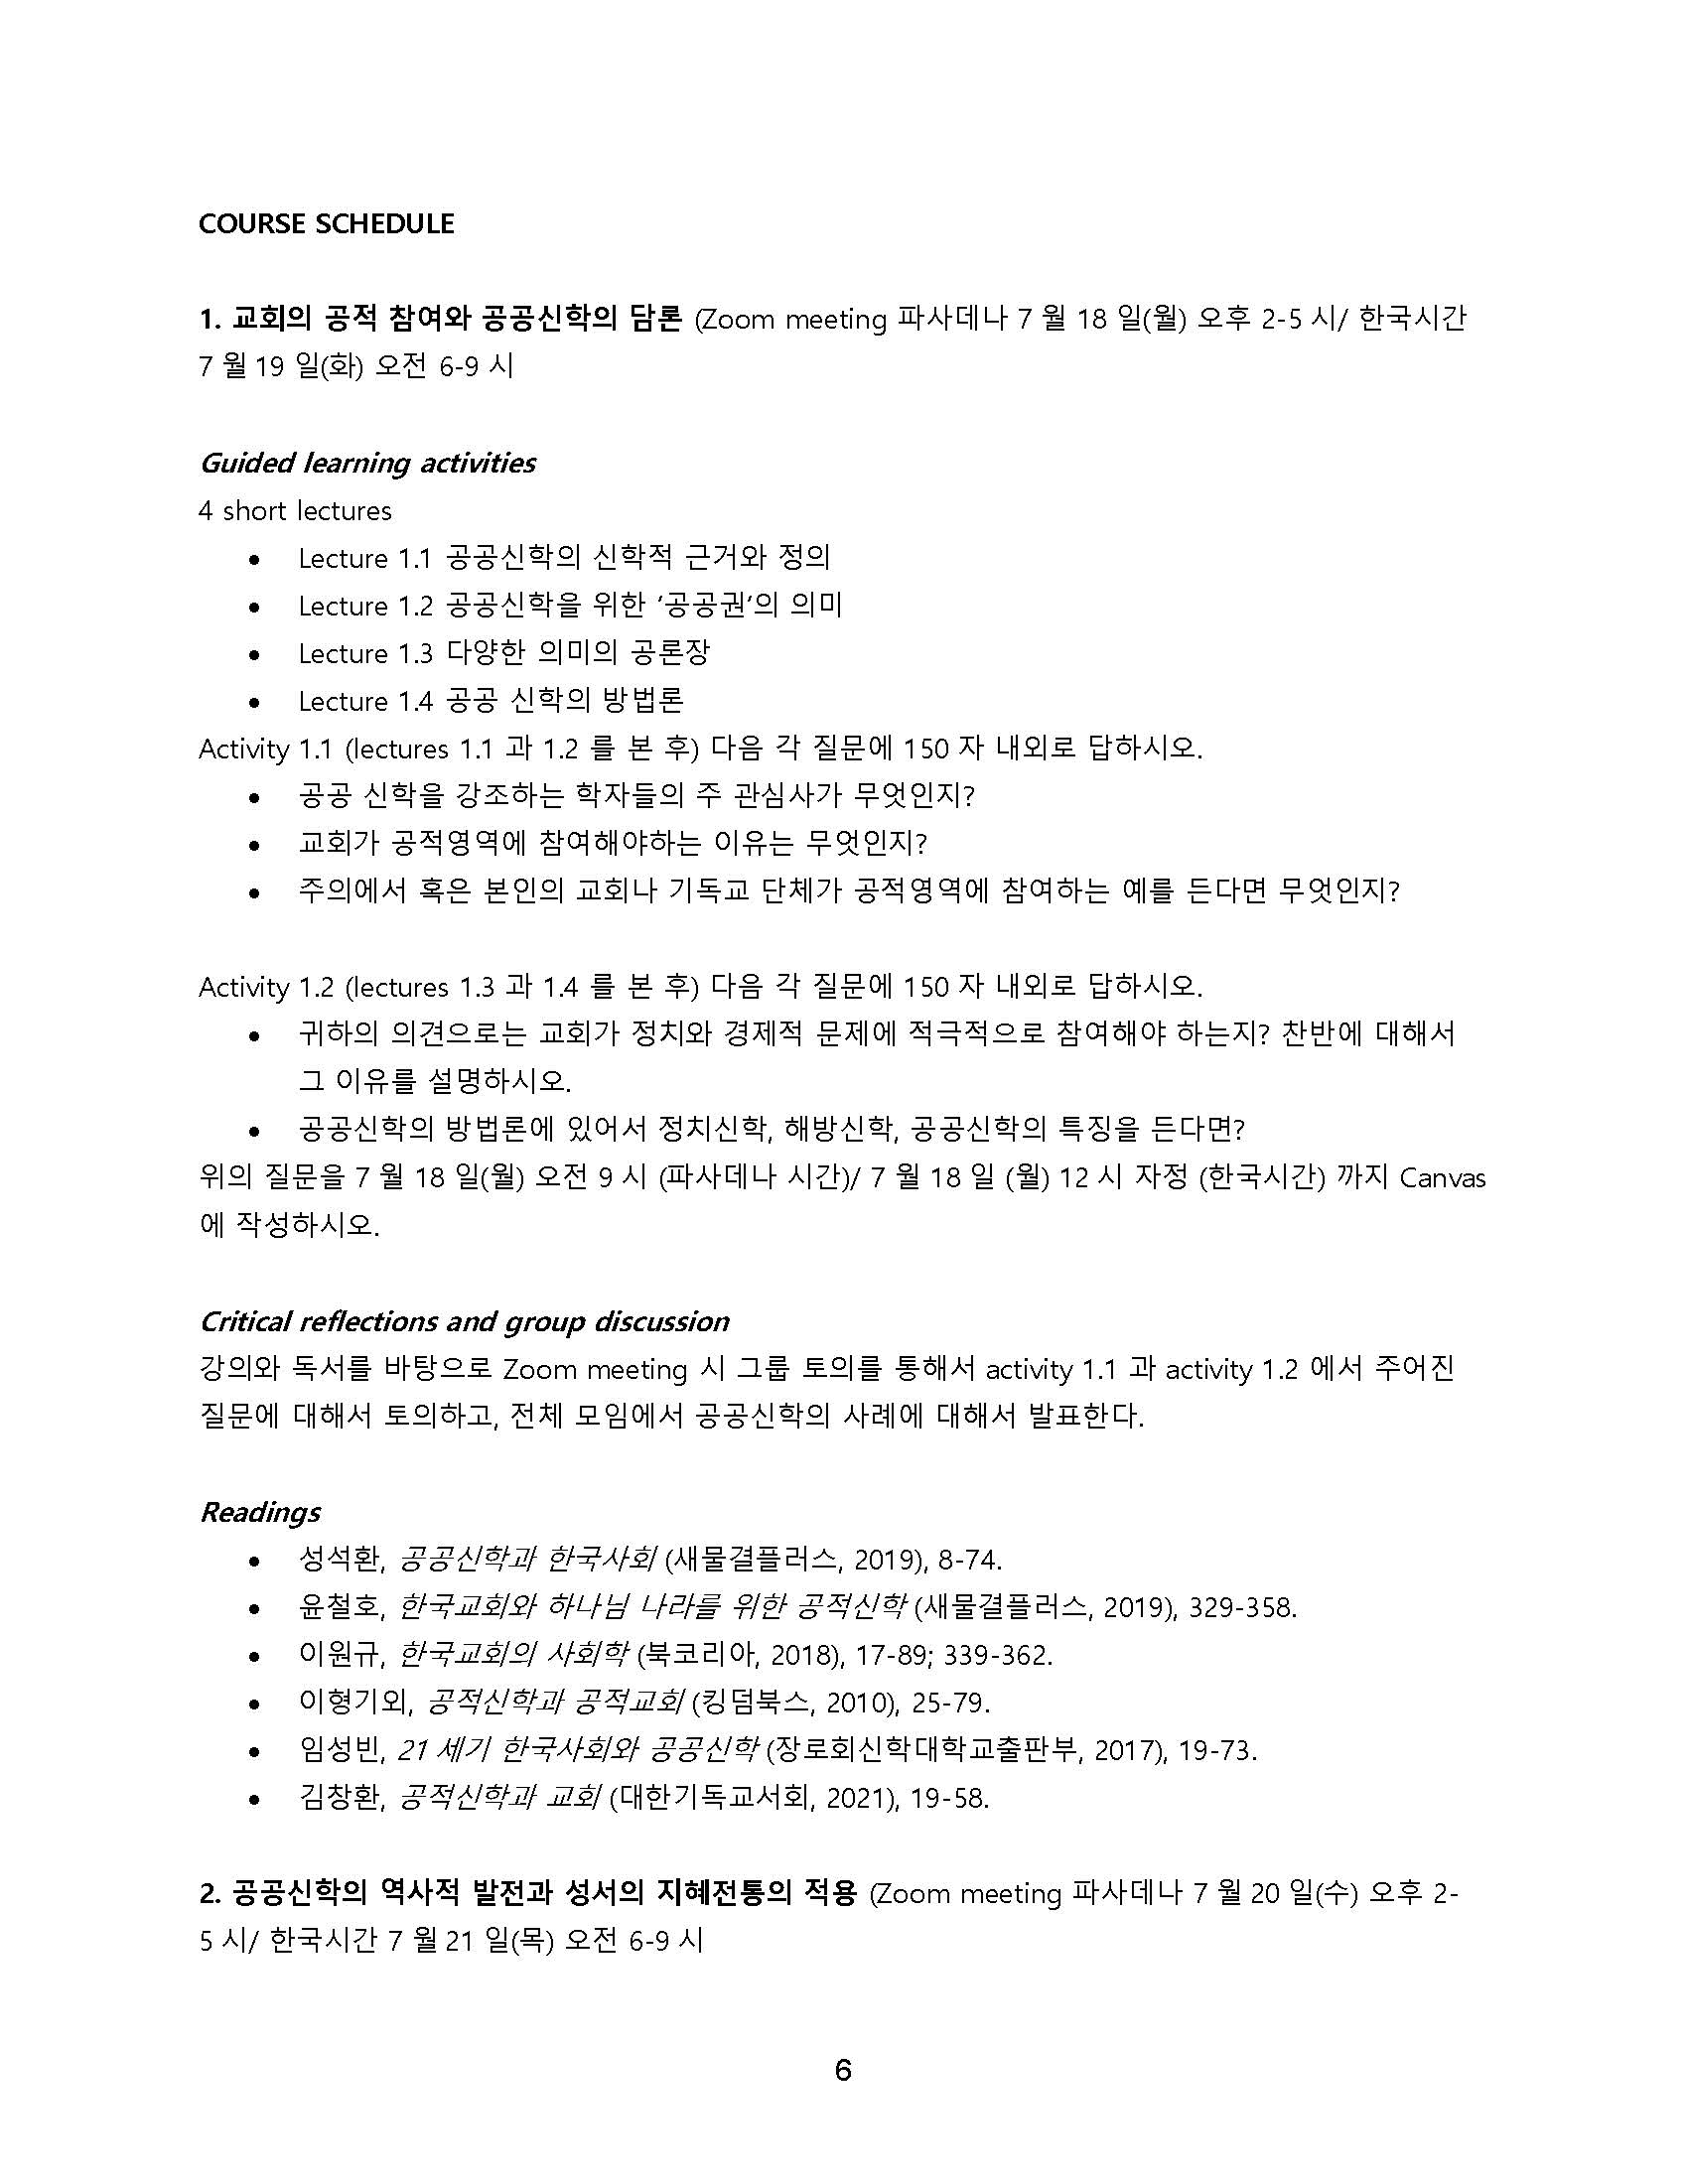 TH741 Public Theology - Korean - syllabus (1)_Page_06.jpg